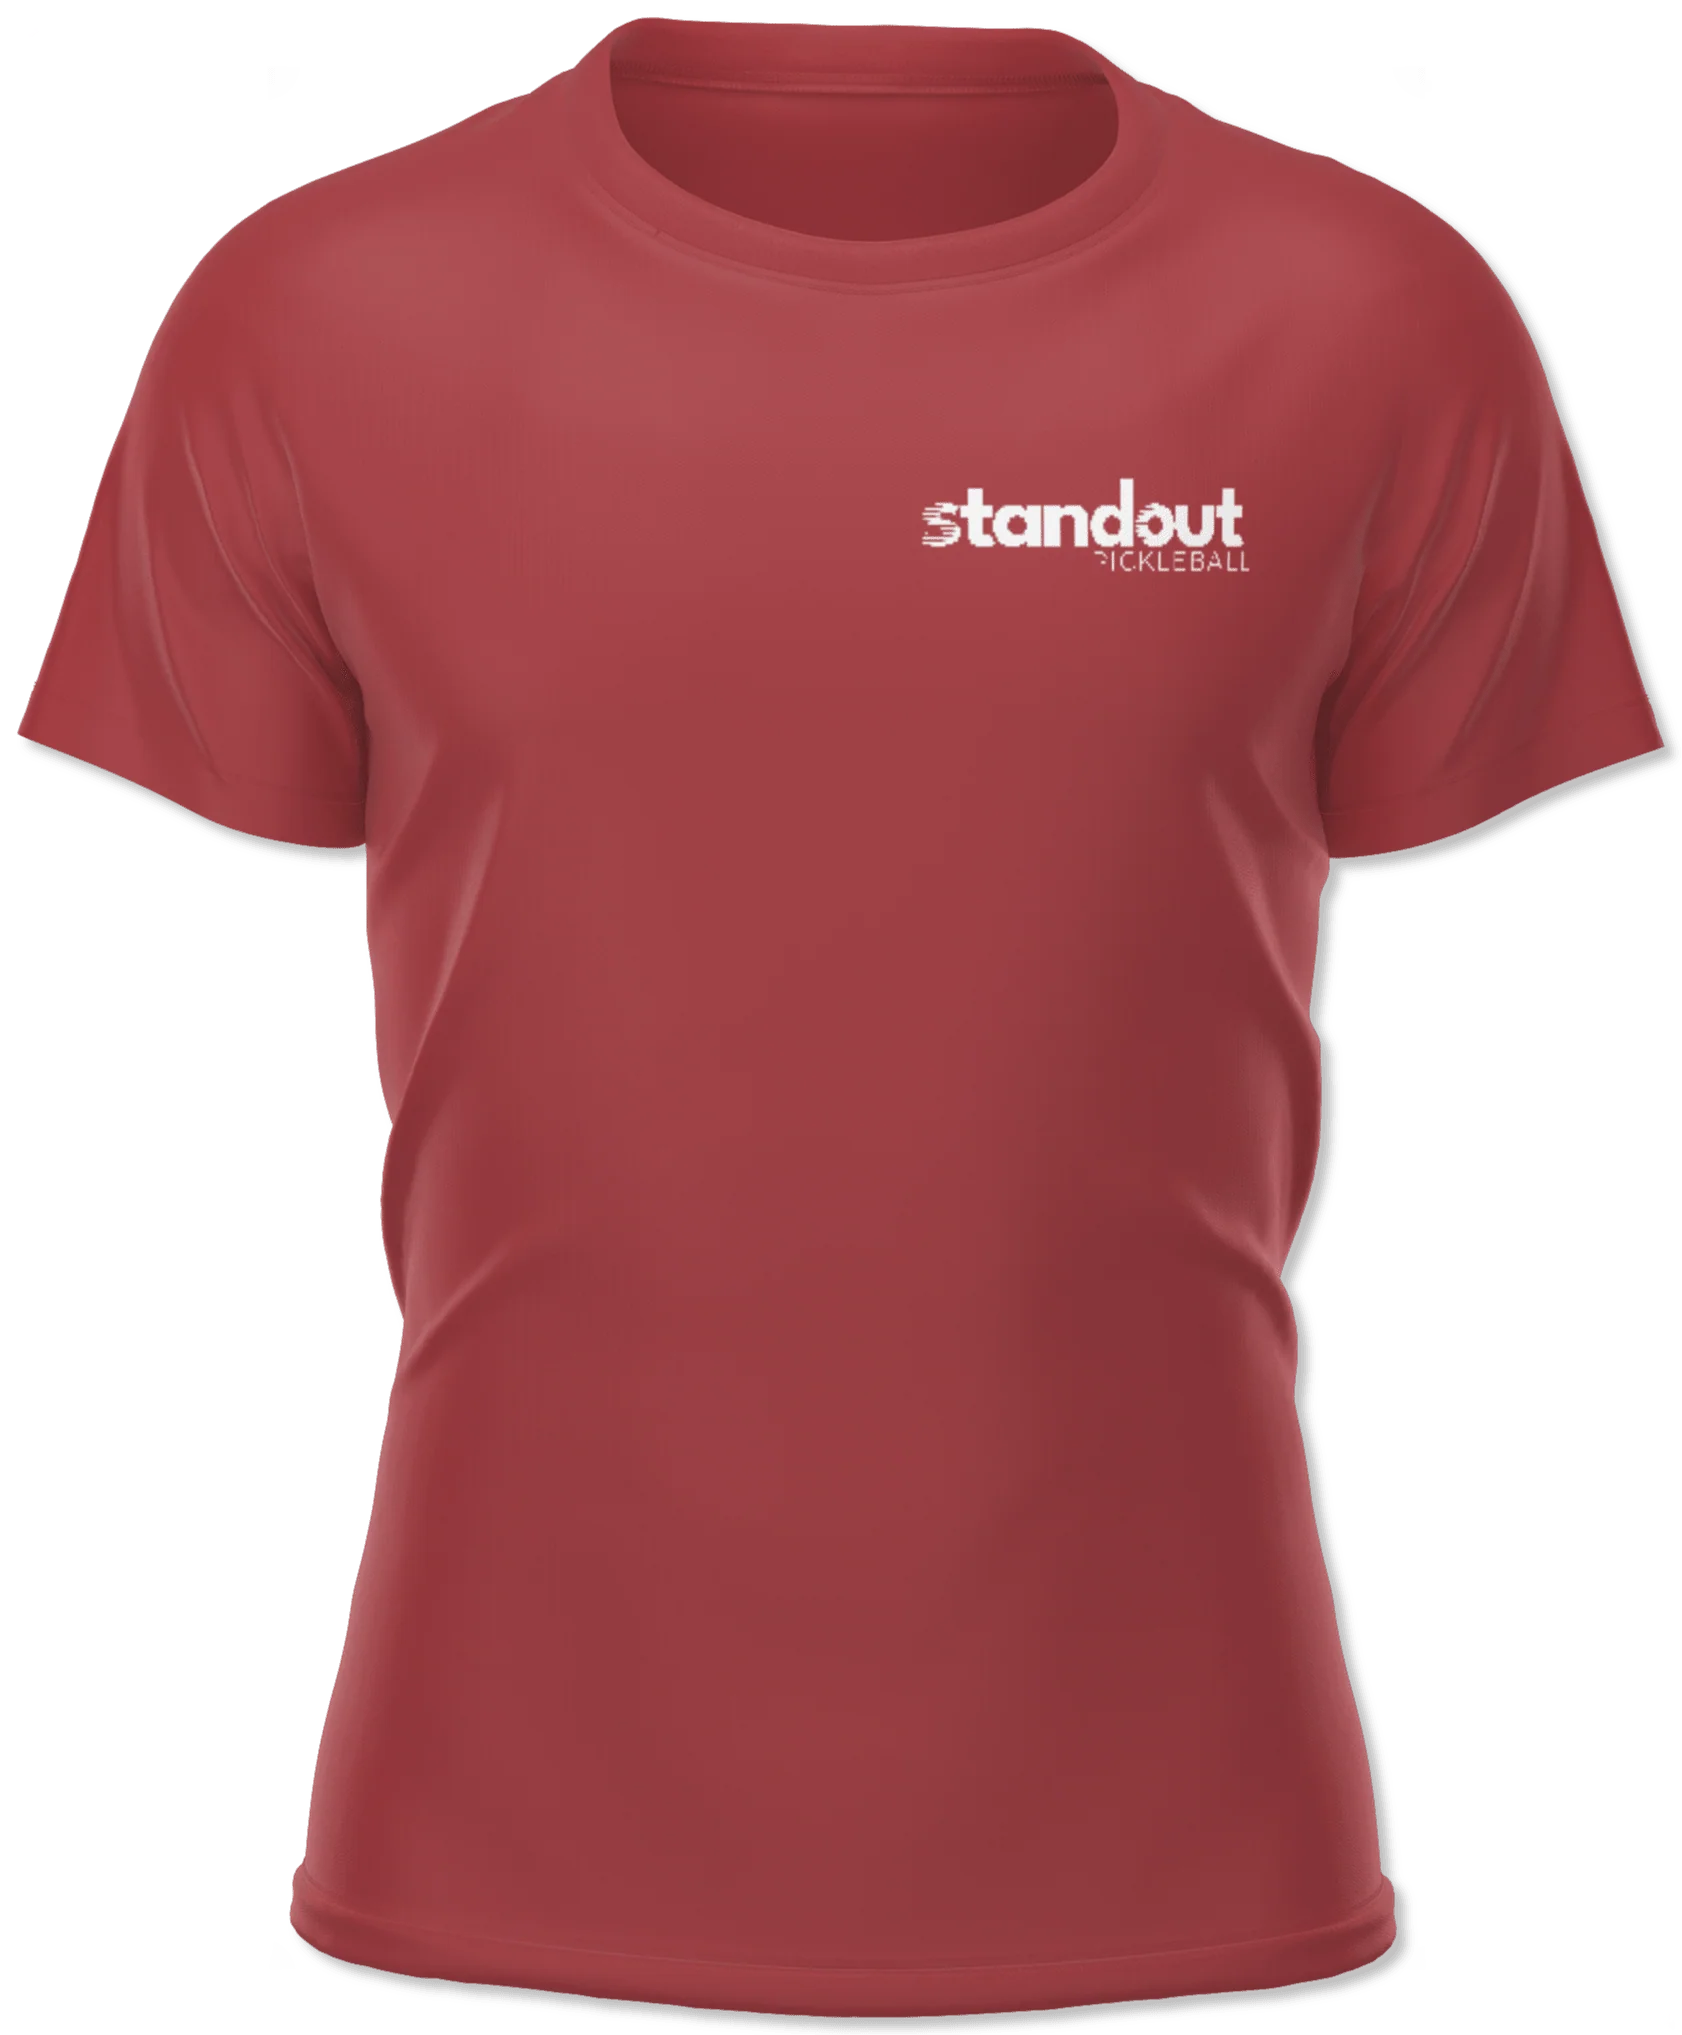 Unisex Short-Sleeve Performance Shirt - Apparel